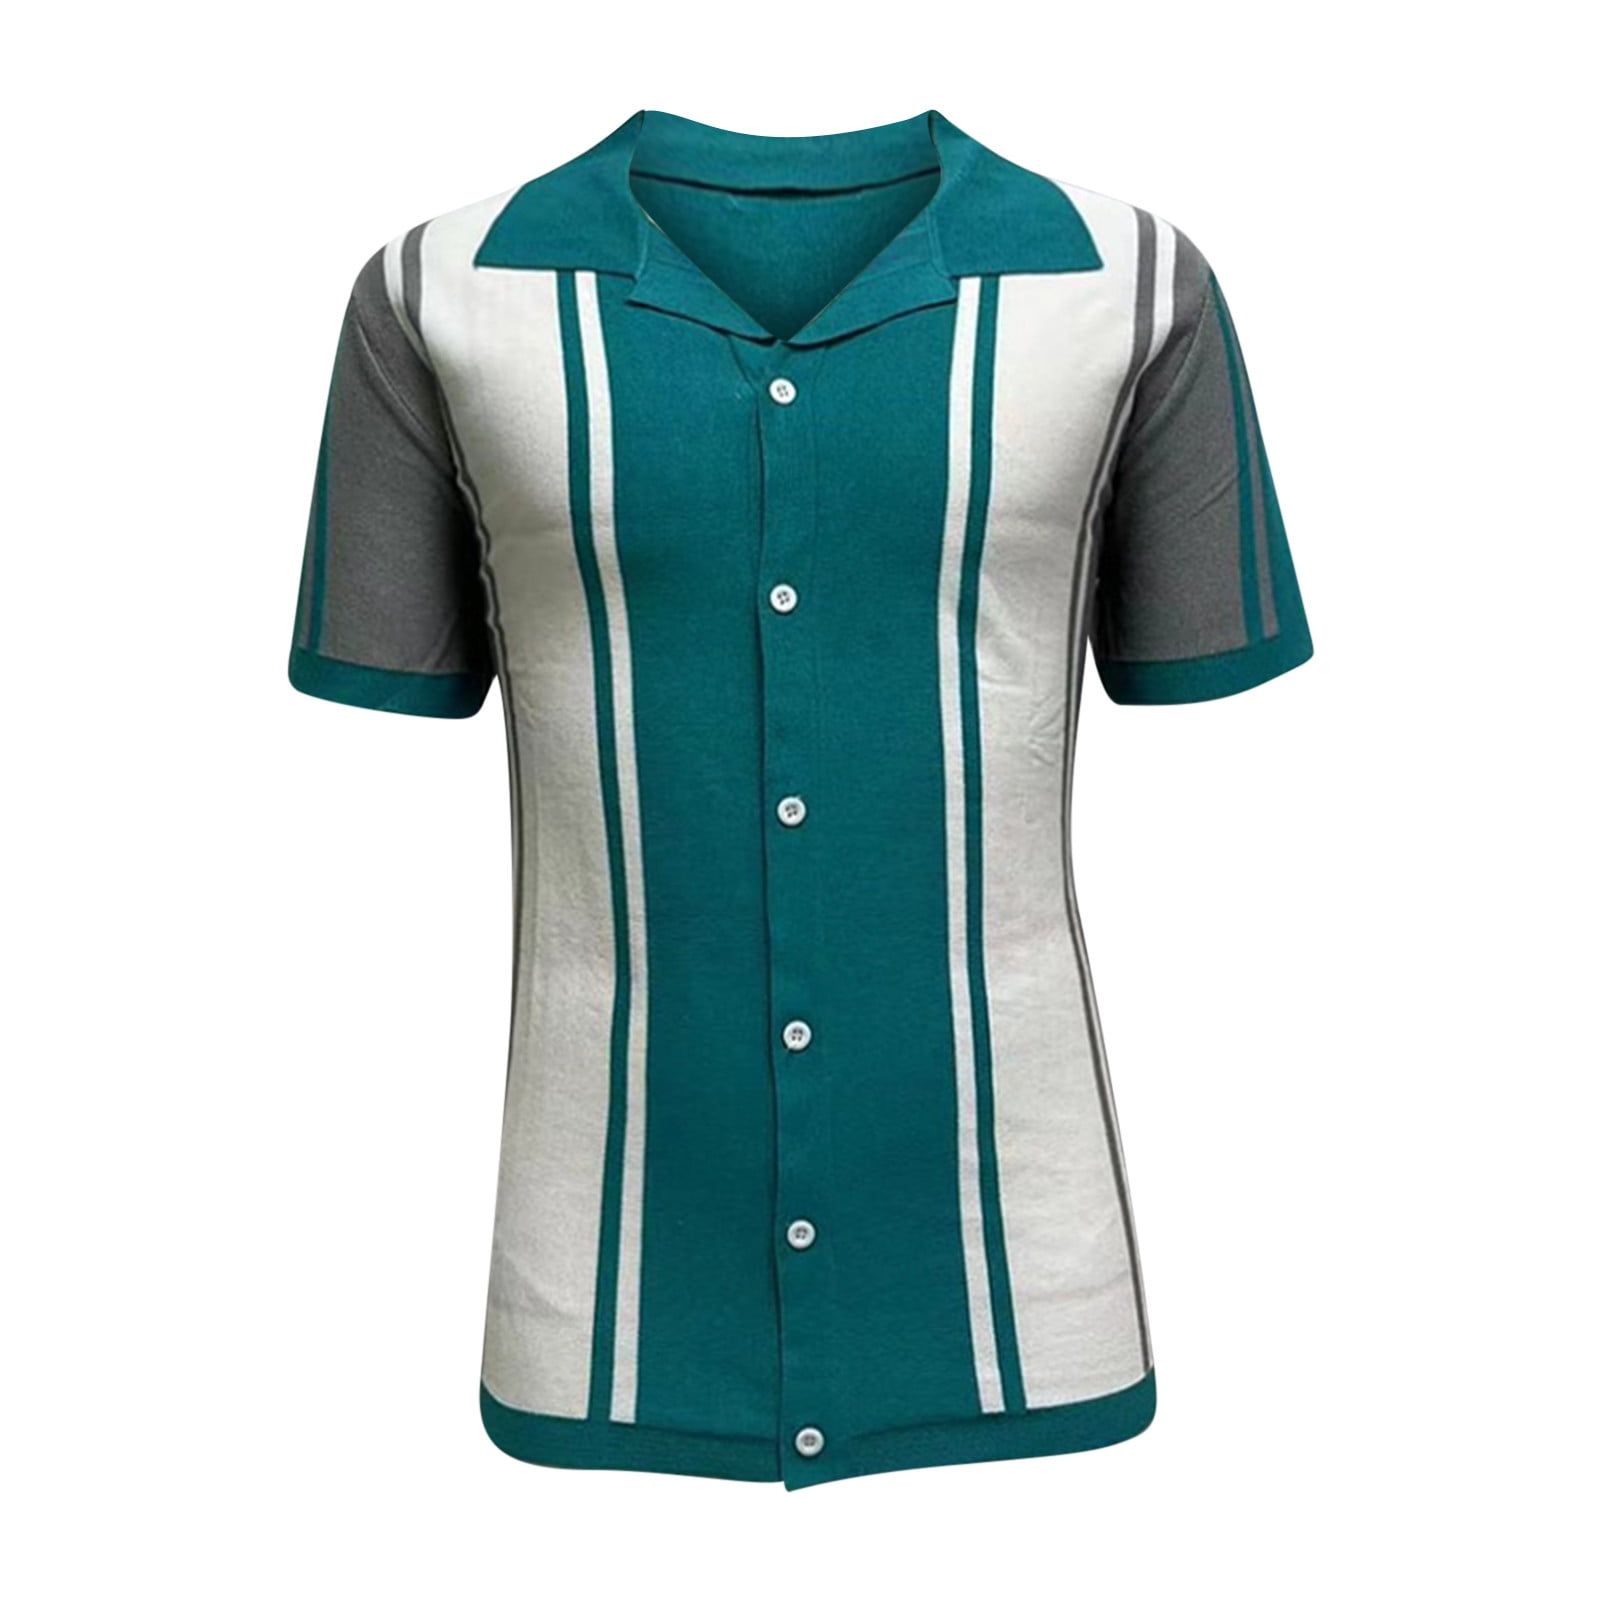 Hfyihgf Men's Polo Shirts Retro Knit Shirt 70s Vintage Striped Knit  Cardigan Shirt Short Sleeve Button Down Golf Shirts(Green,XL)